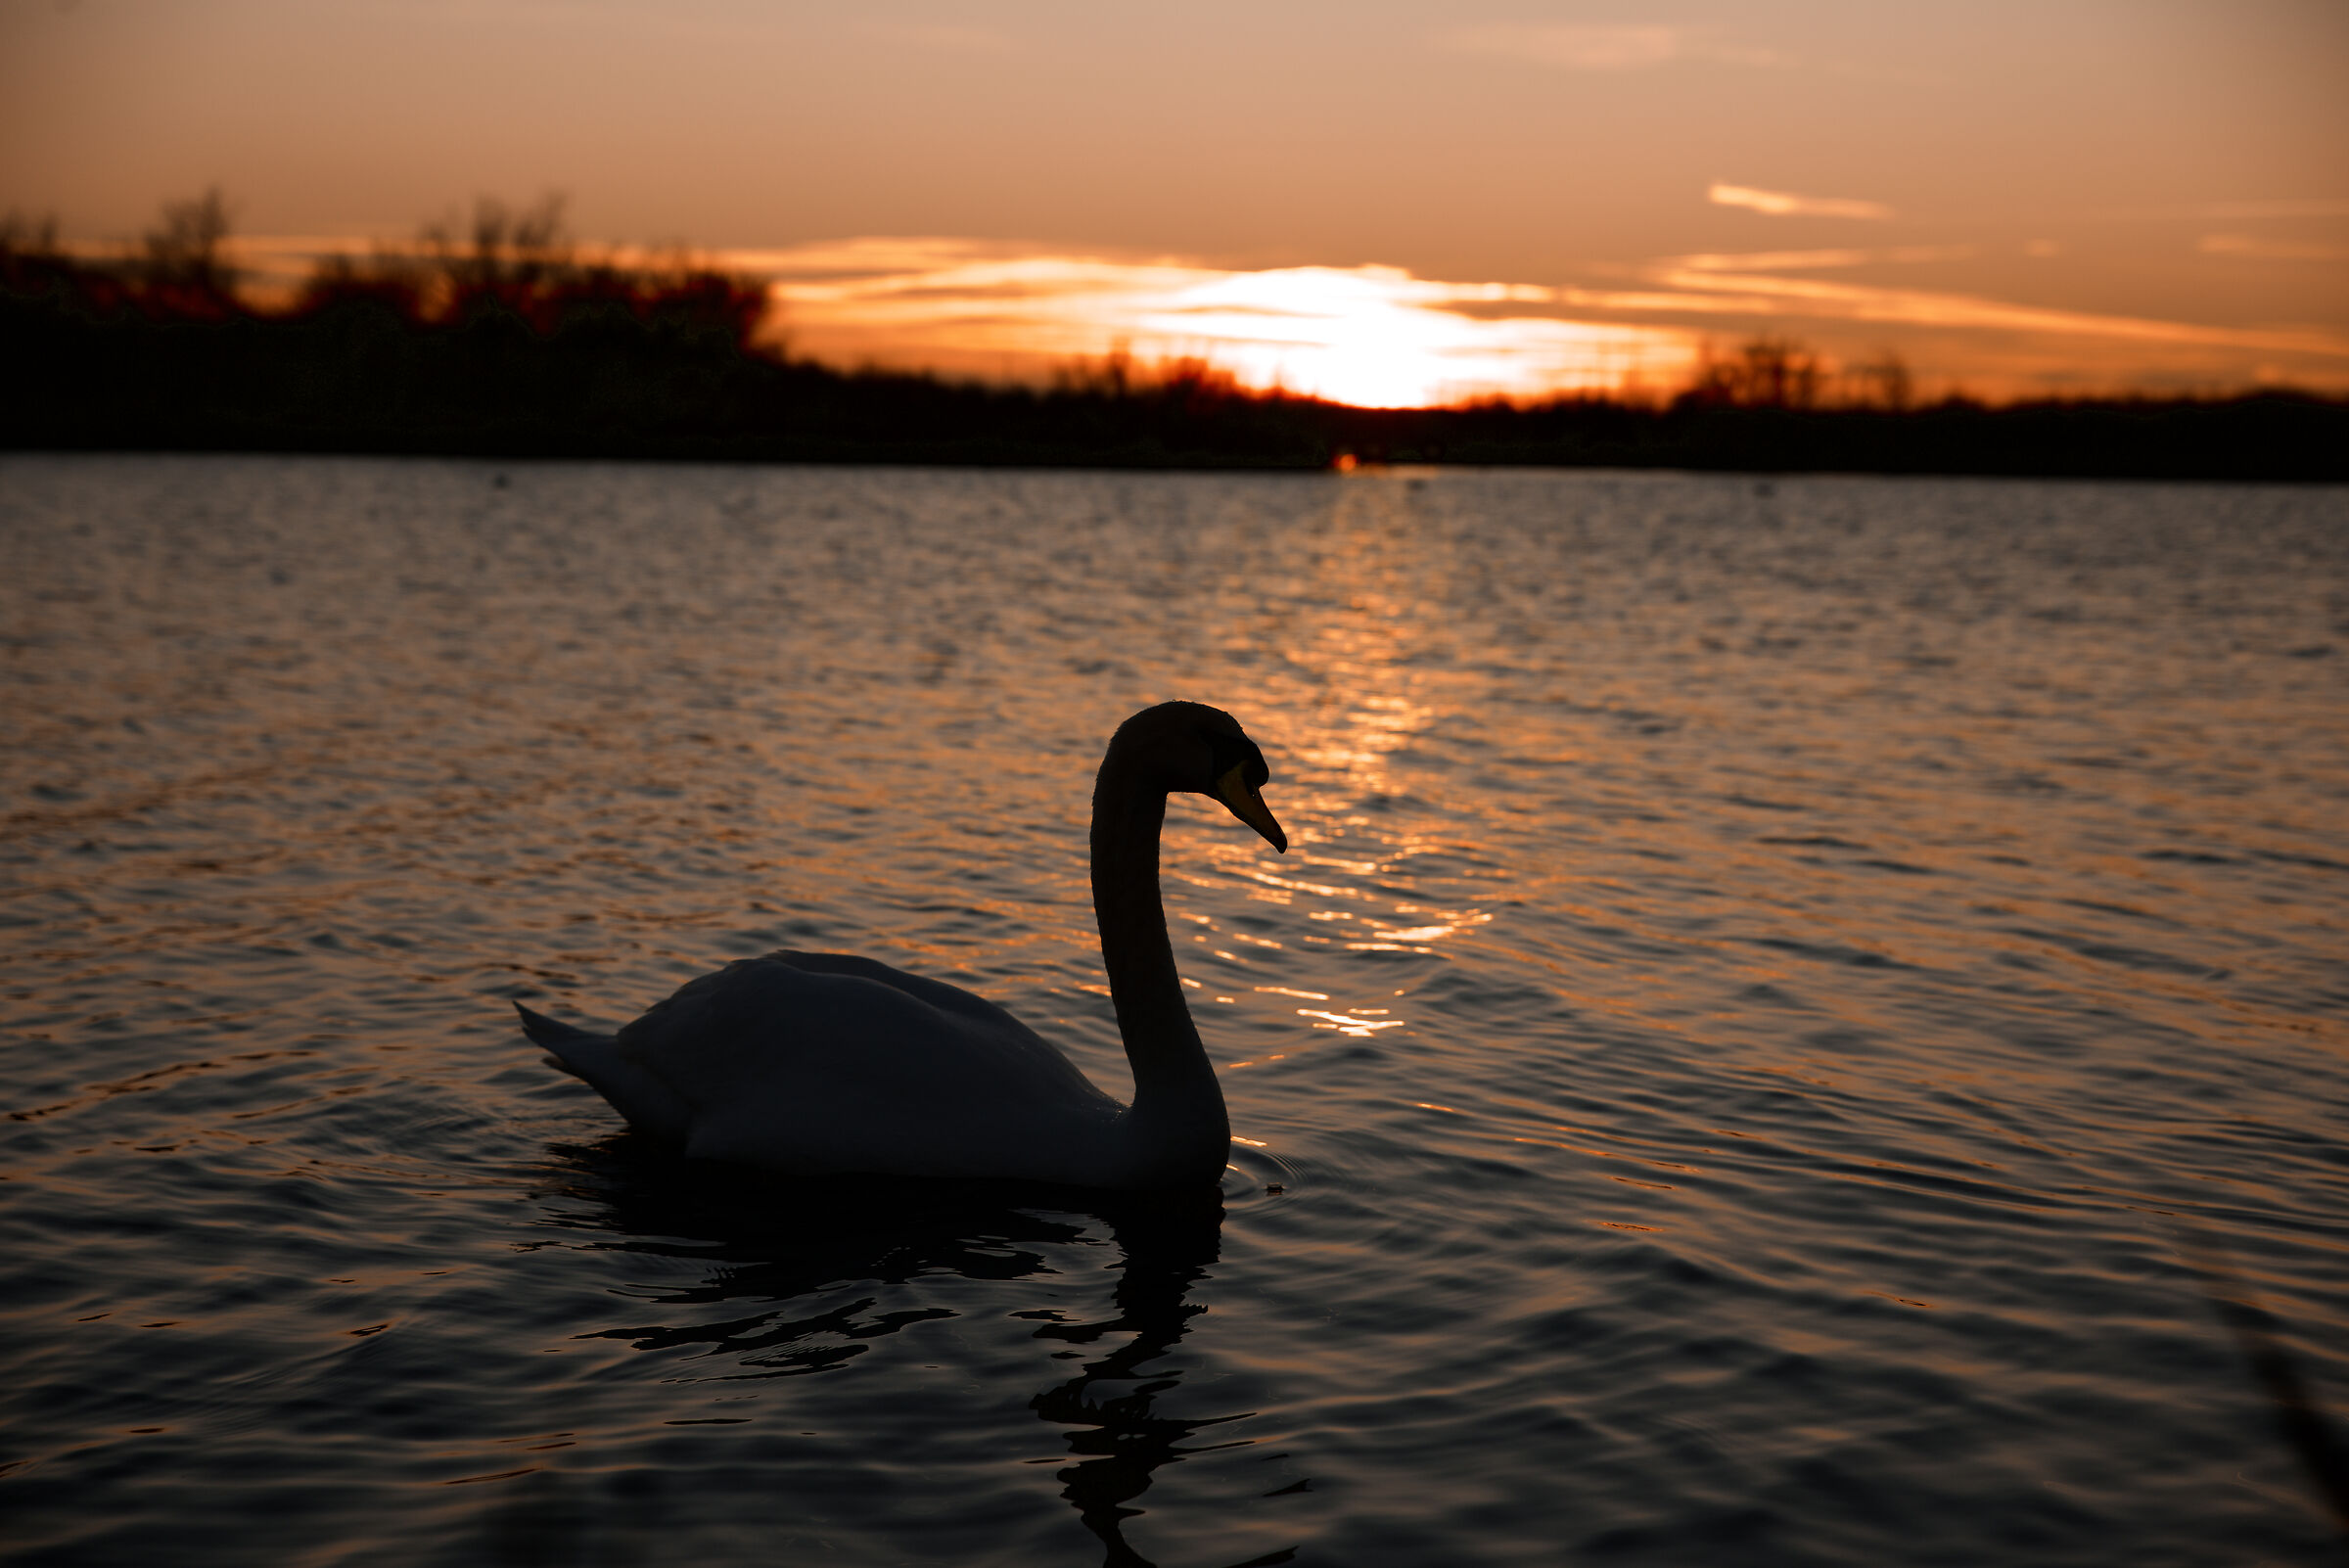 The swan enjoys the sunset...